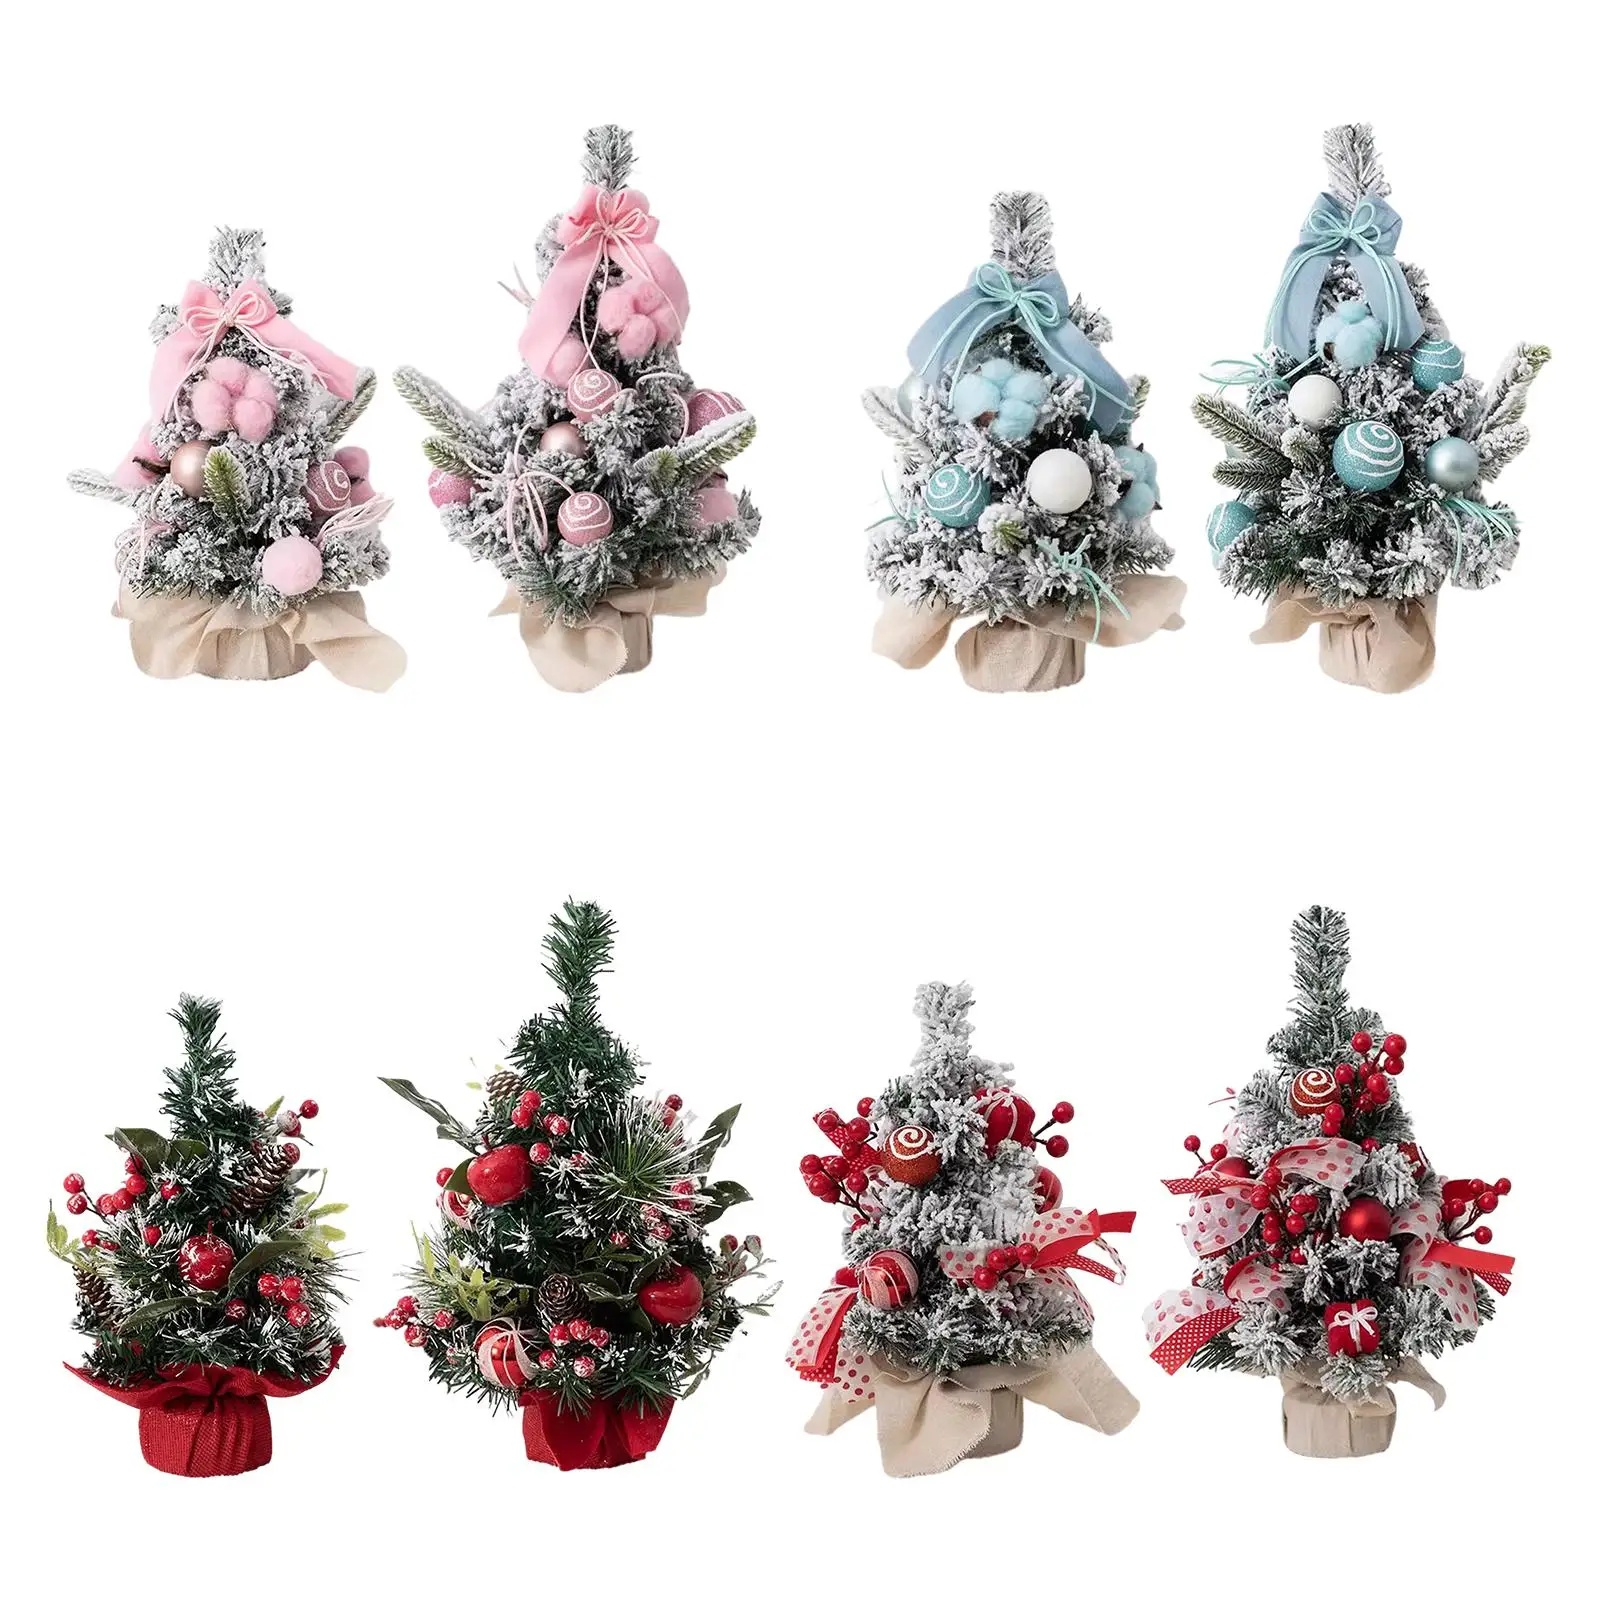 Mini Tabletop Christmas Tree Small White Artificial Christmas Trees Snow for Christmas Decor, Holiday Decorations